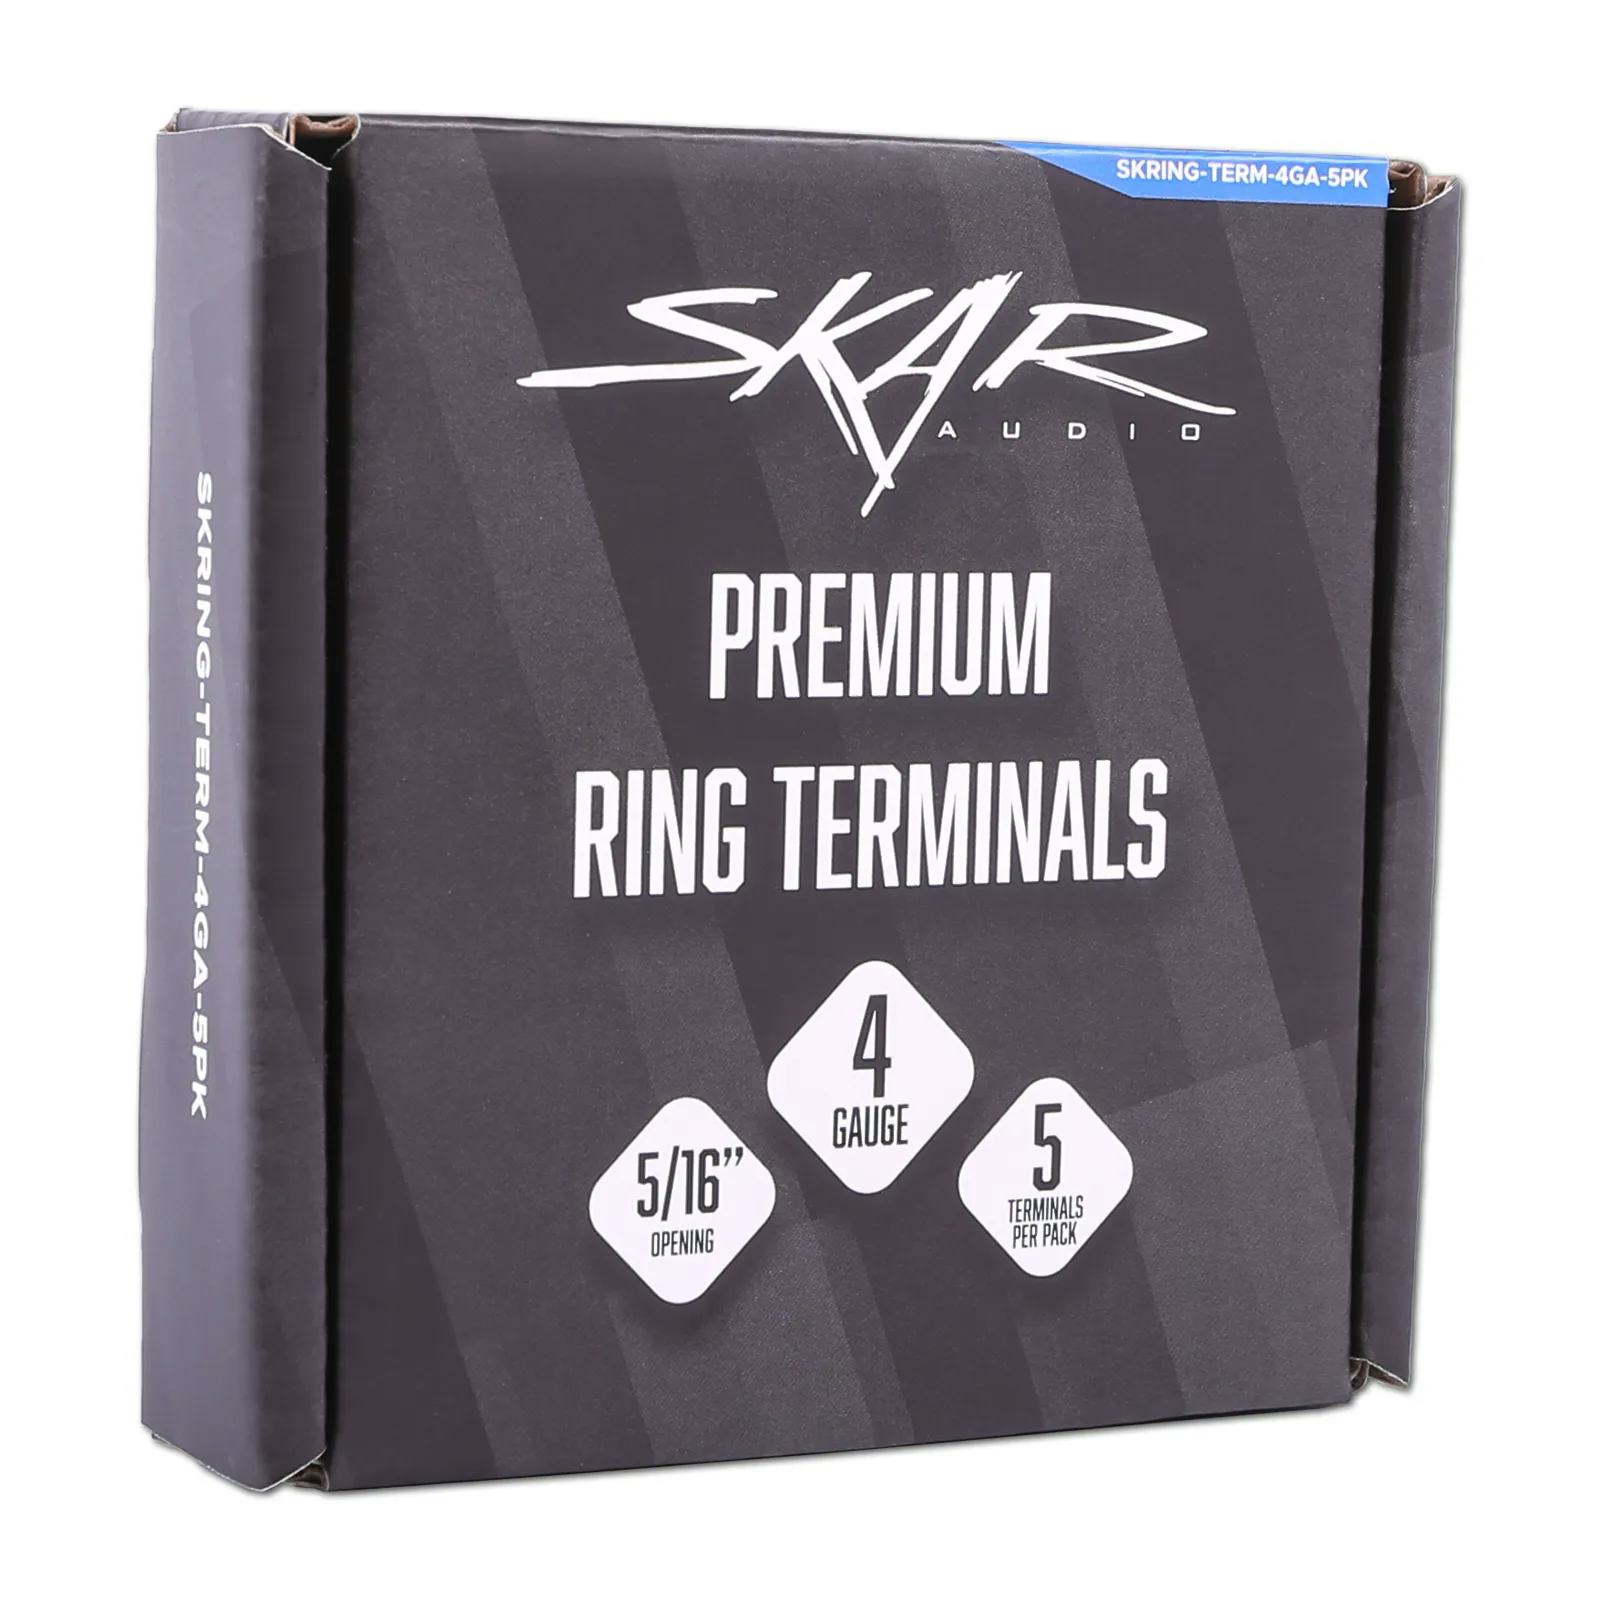 SKRING-TERM-4GA-5PK | 4 Gauge (5/16") Nickel Plated Premium Ring Terminals (5-Pack) #6